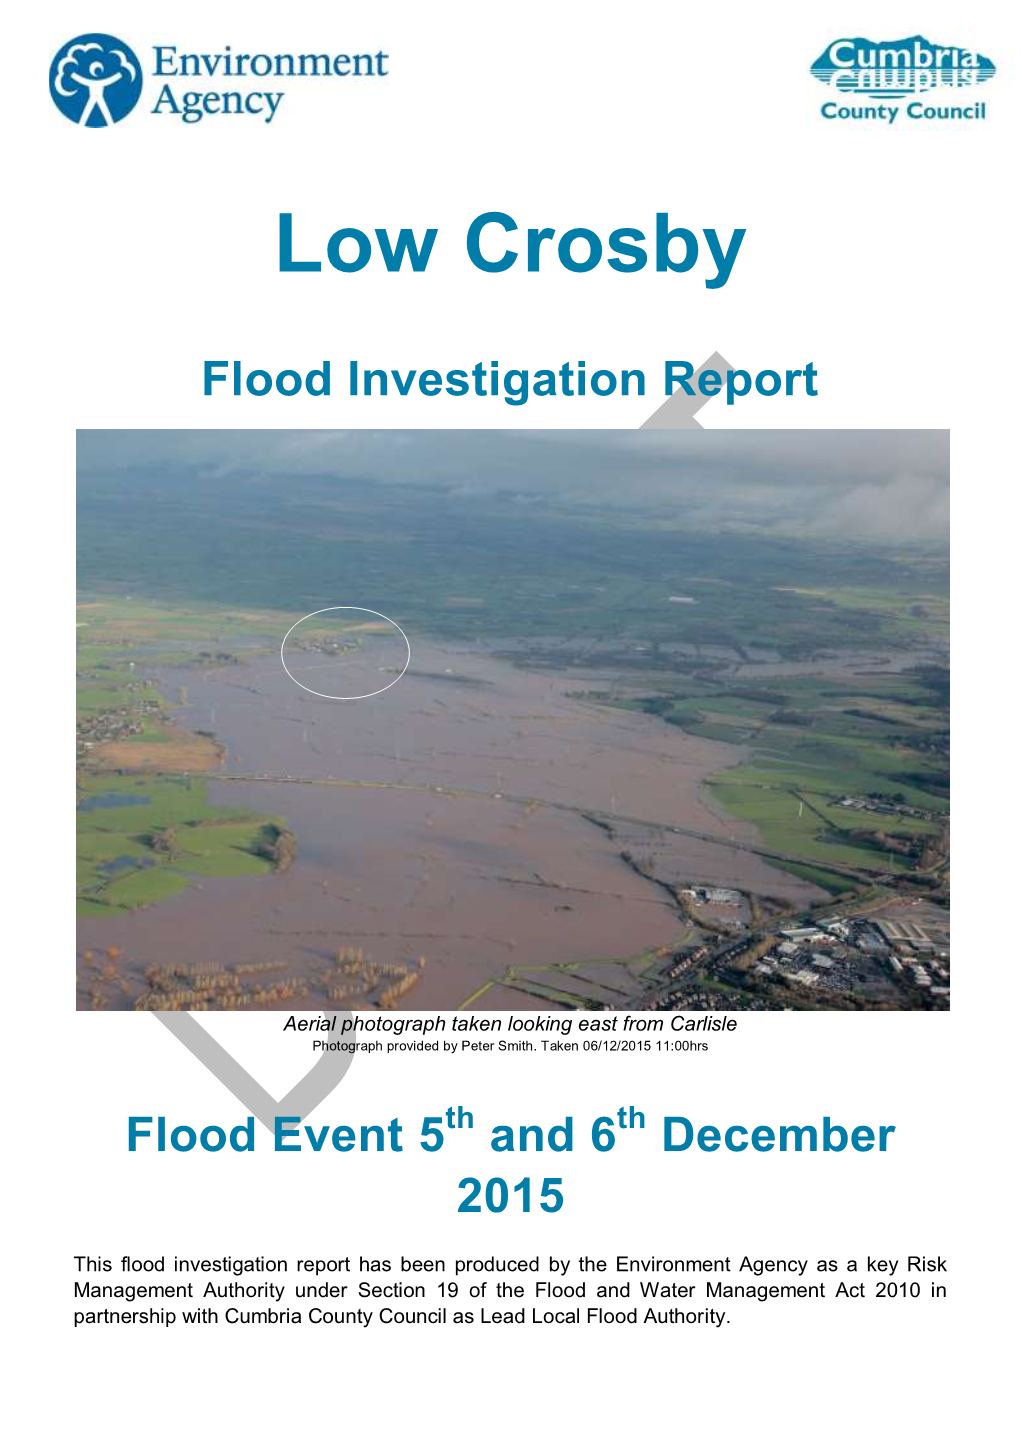 Low Crosby Flood Report